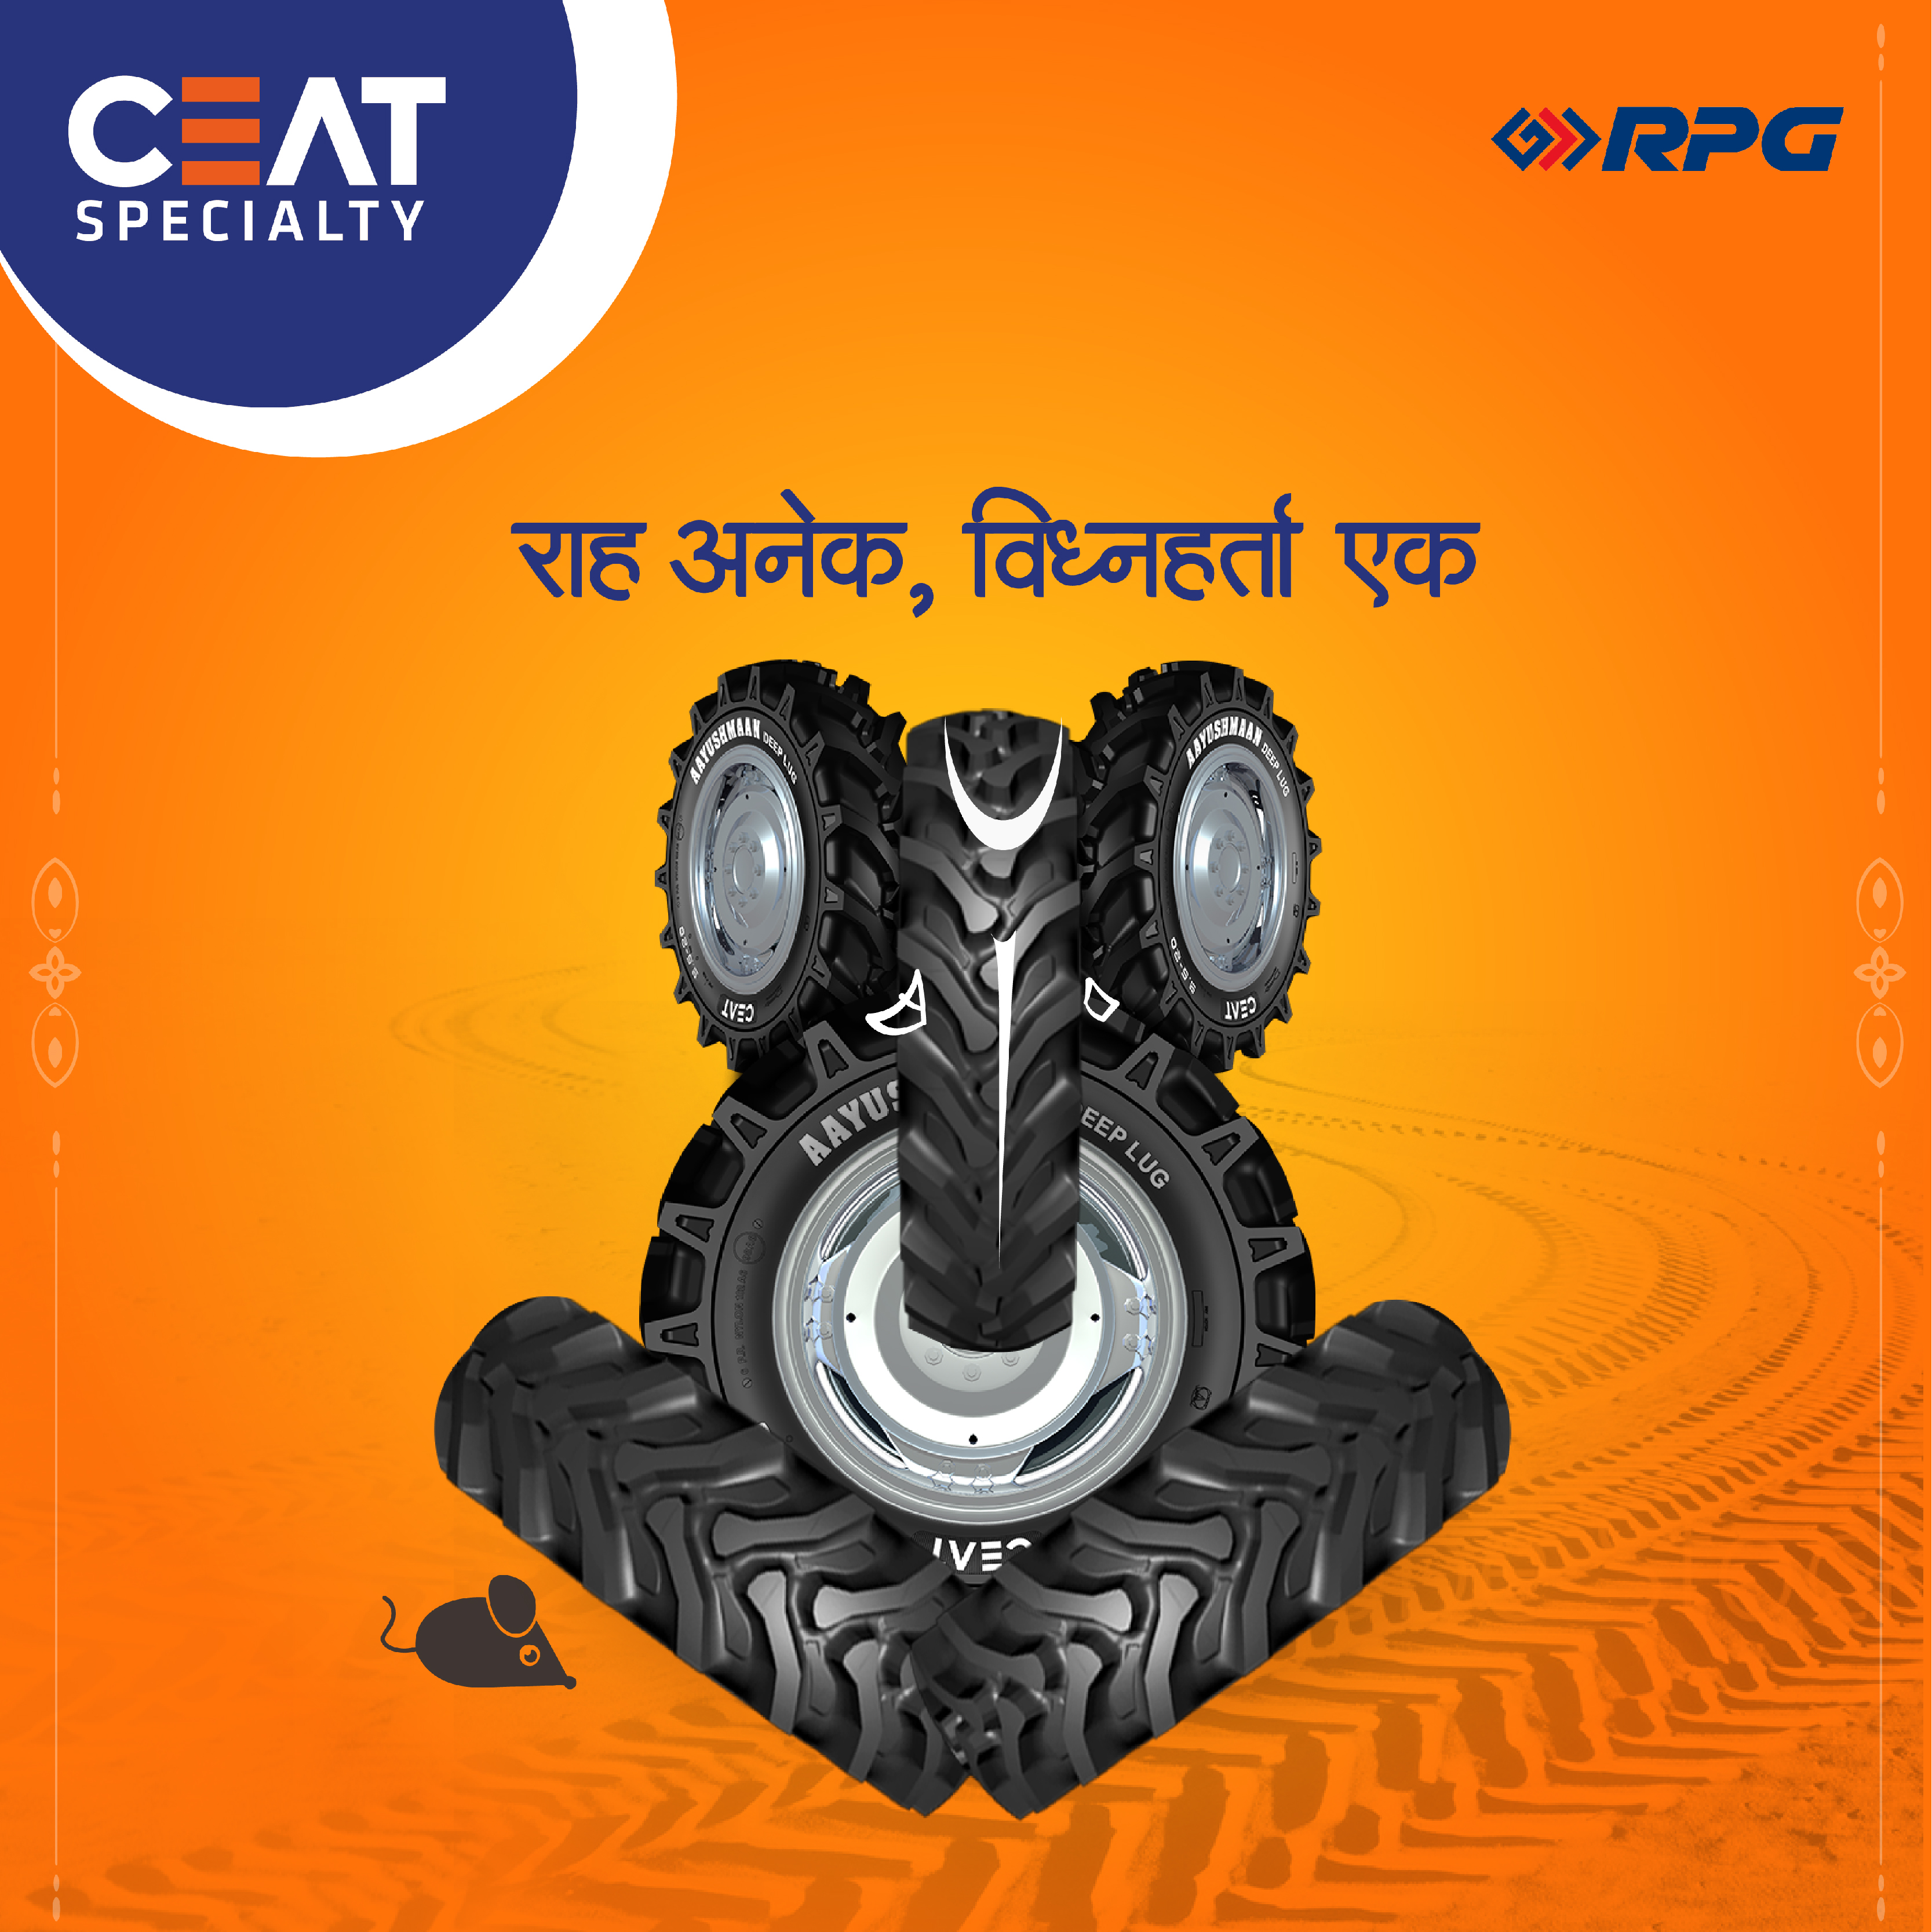 Ganesh chaturti post design idea by 4AM